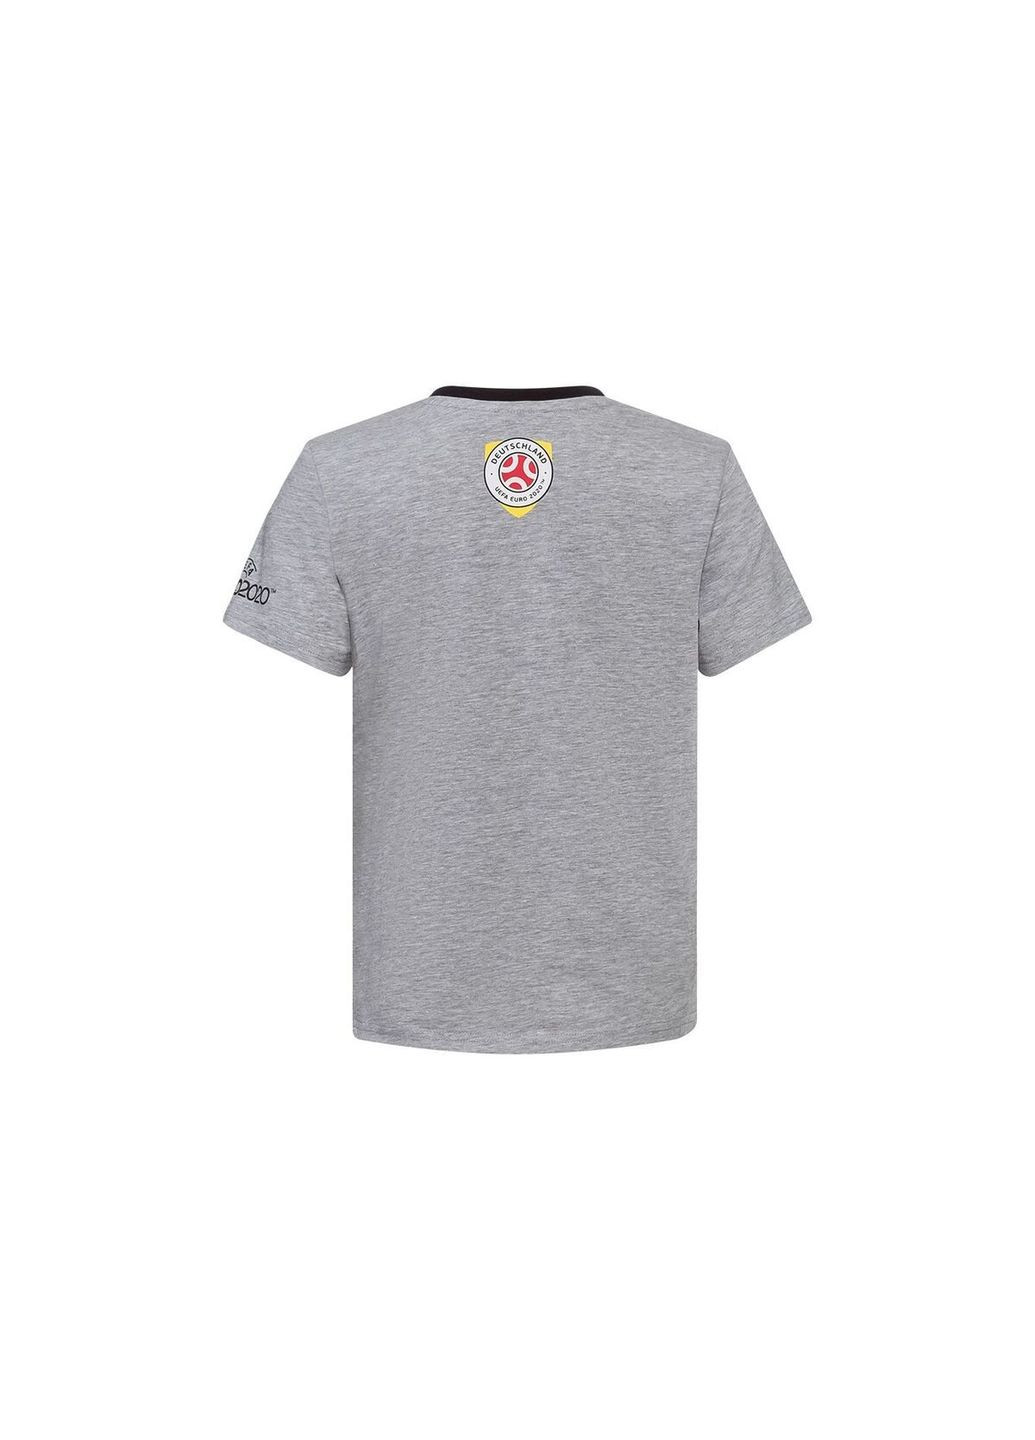 Сіра демісезонна футболка німеччина / deutschland для хлопчика 329637 сірий Pepperts